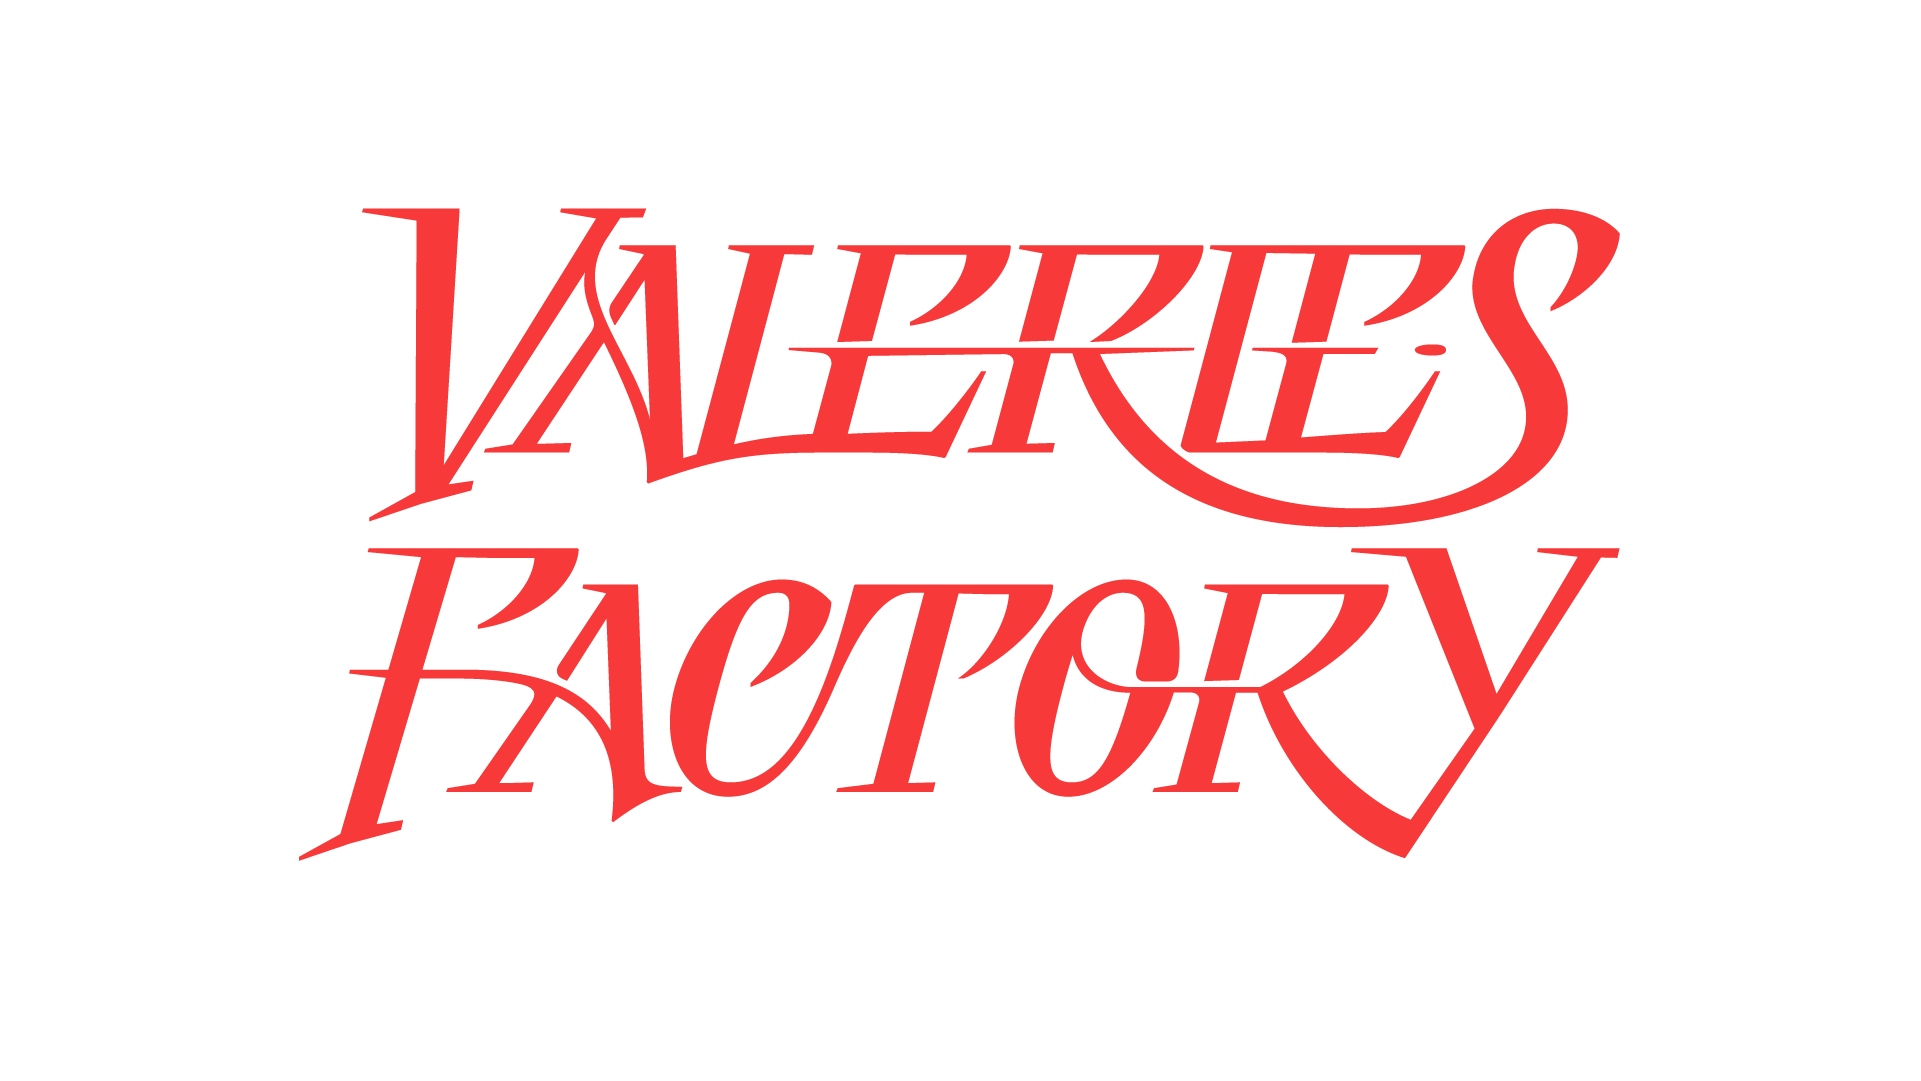 Valeries factory